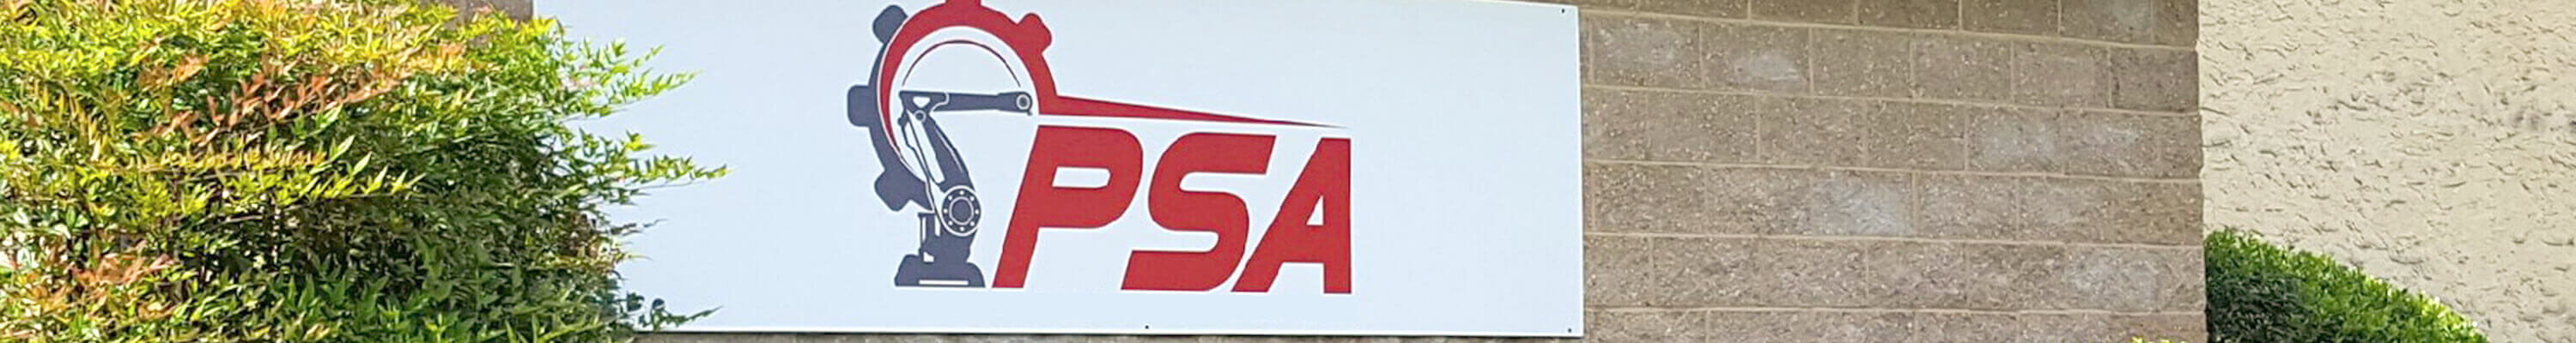 PSA office sign